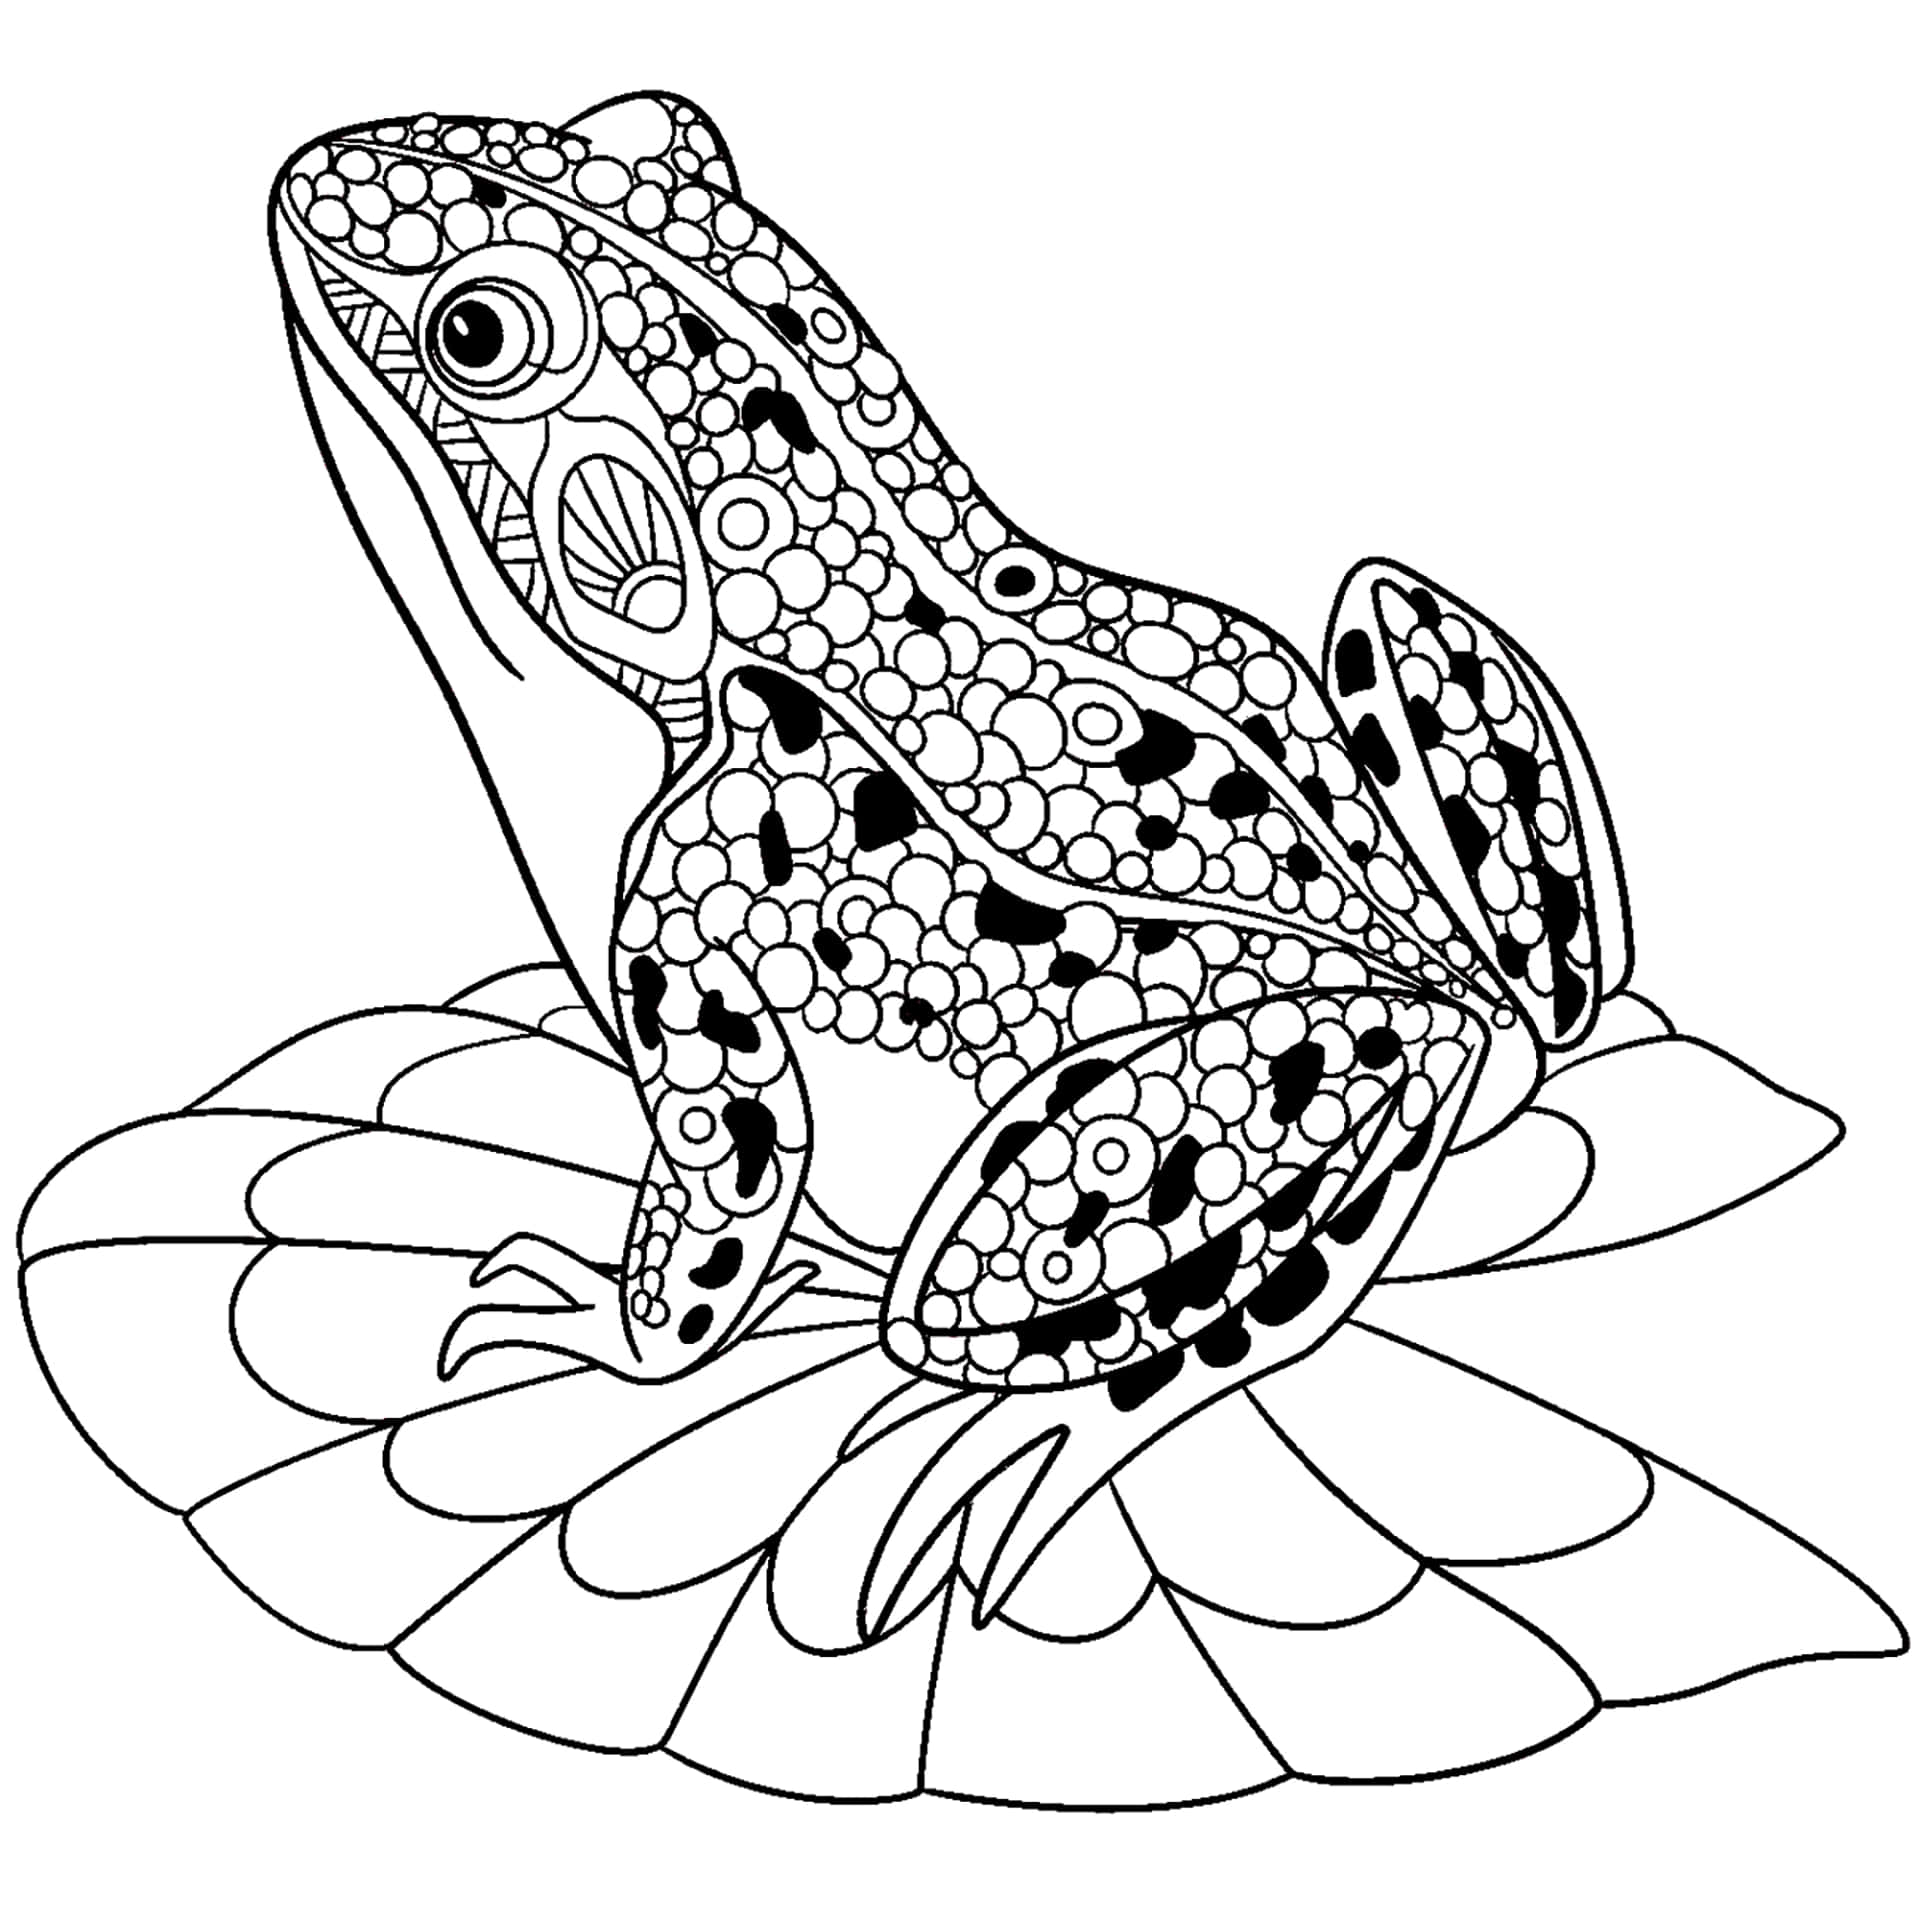 A whimsical handdrawn frog